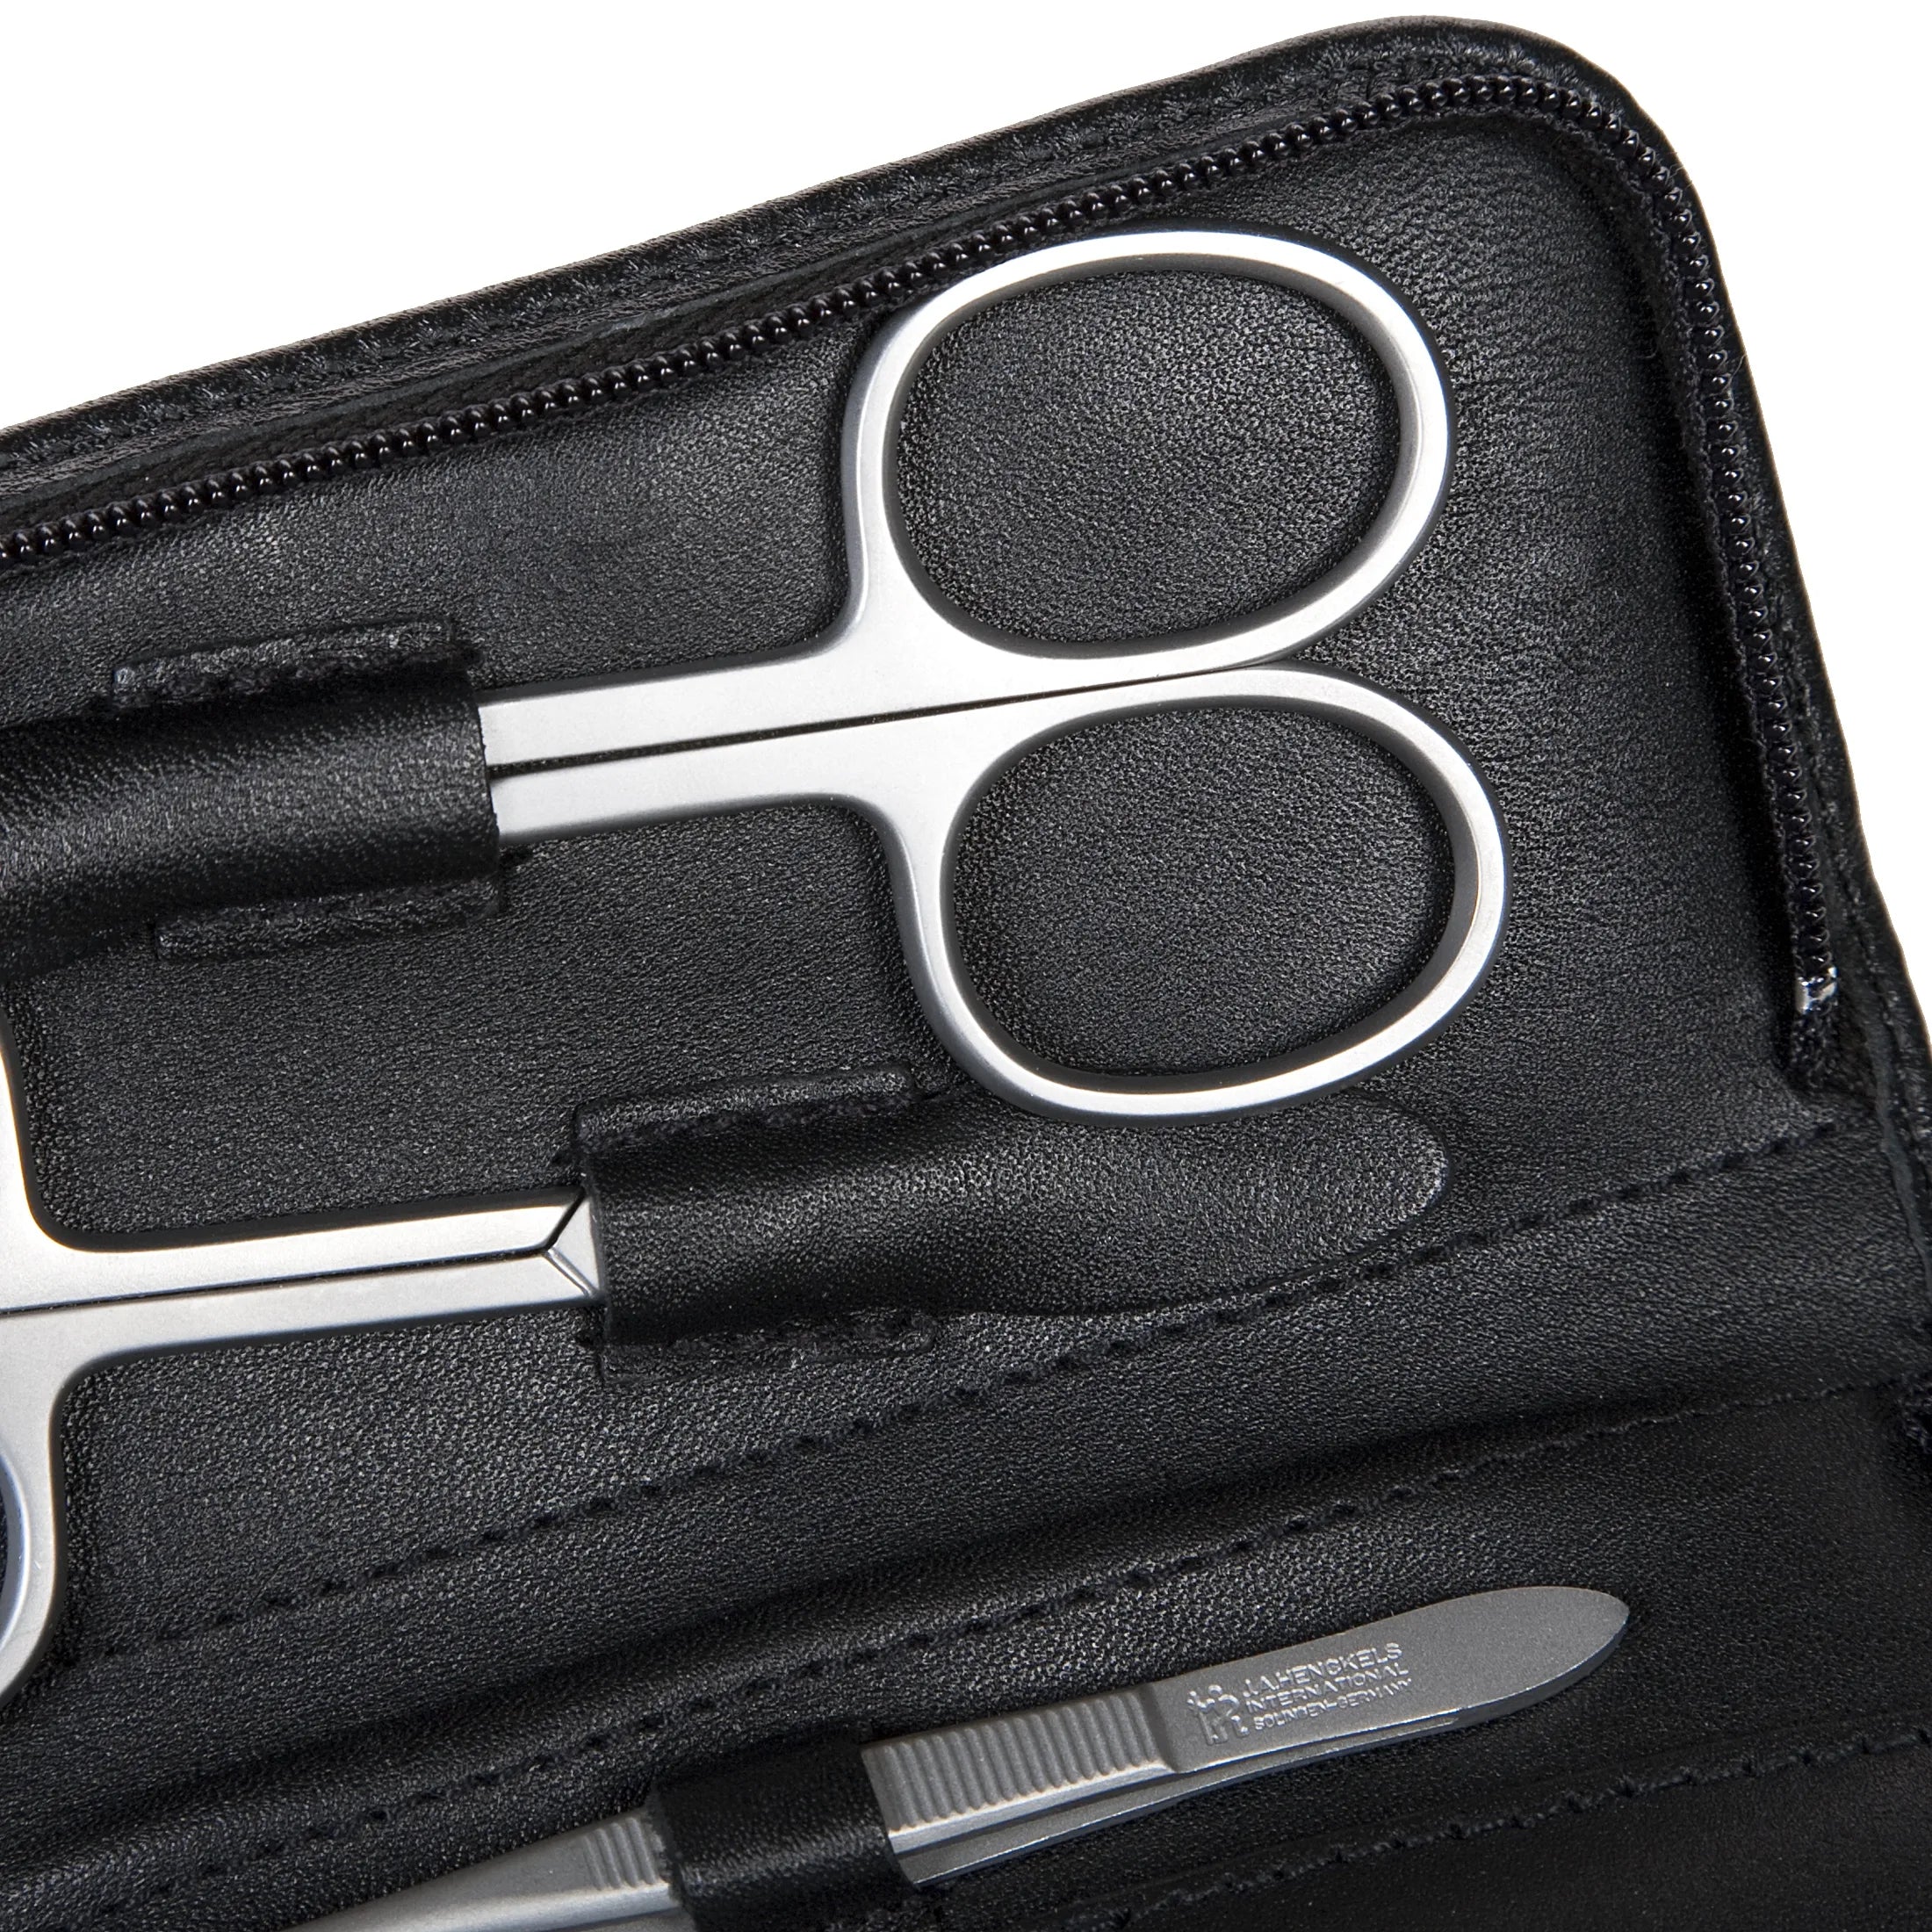 Windrose Nappa Manicure leather zipper case 14 cm - black